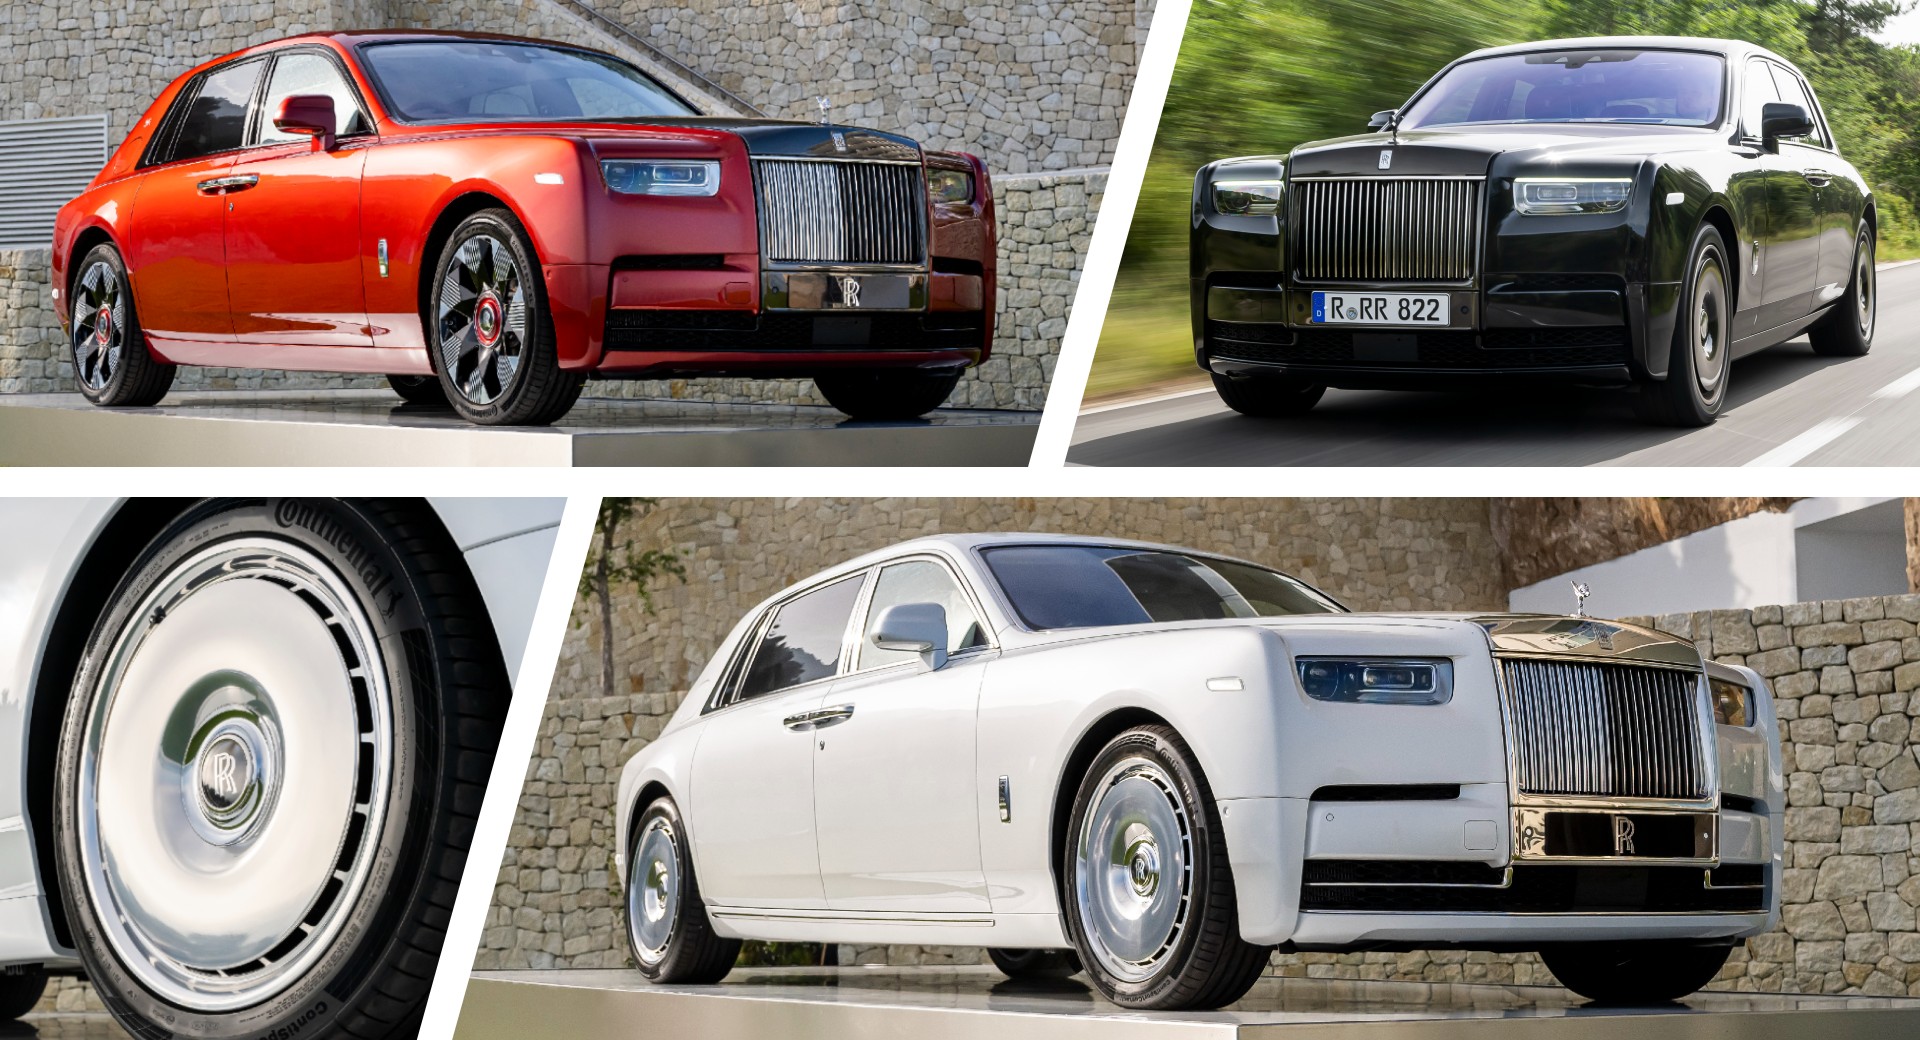 Gallery: Rolls-Royce Phantom every generation